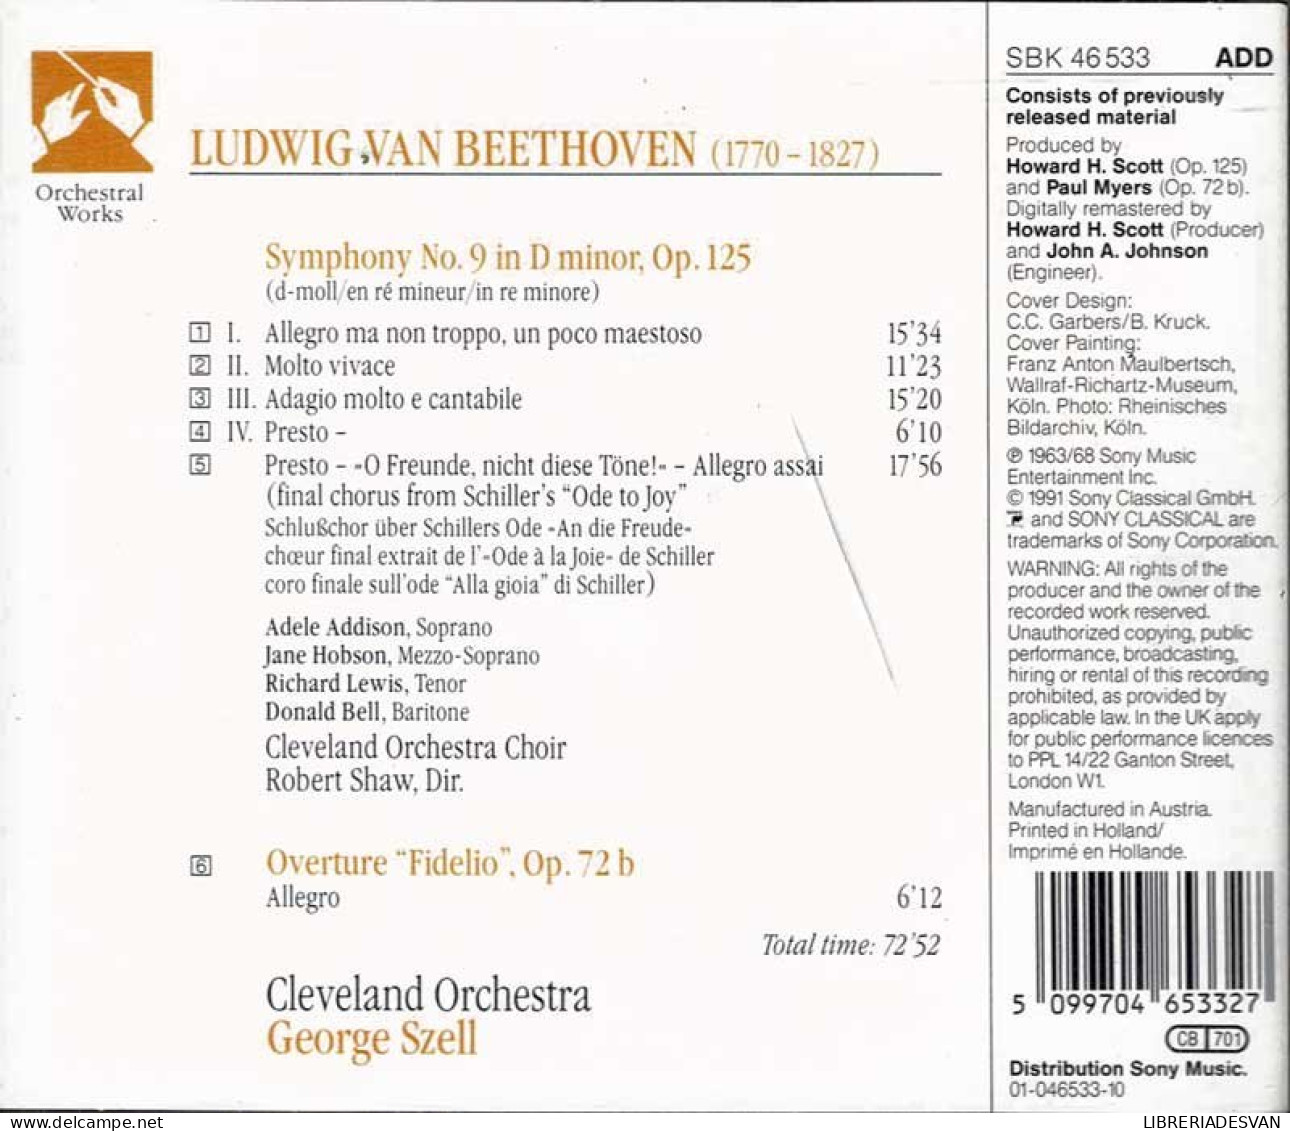 Beethoven - Symphony No. 9 Choral / Fidelio Overture. CD - Klassiekers